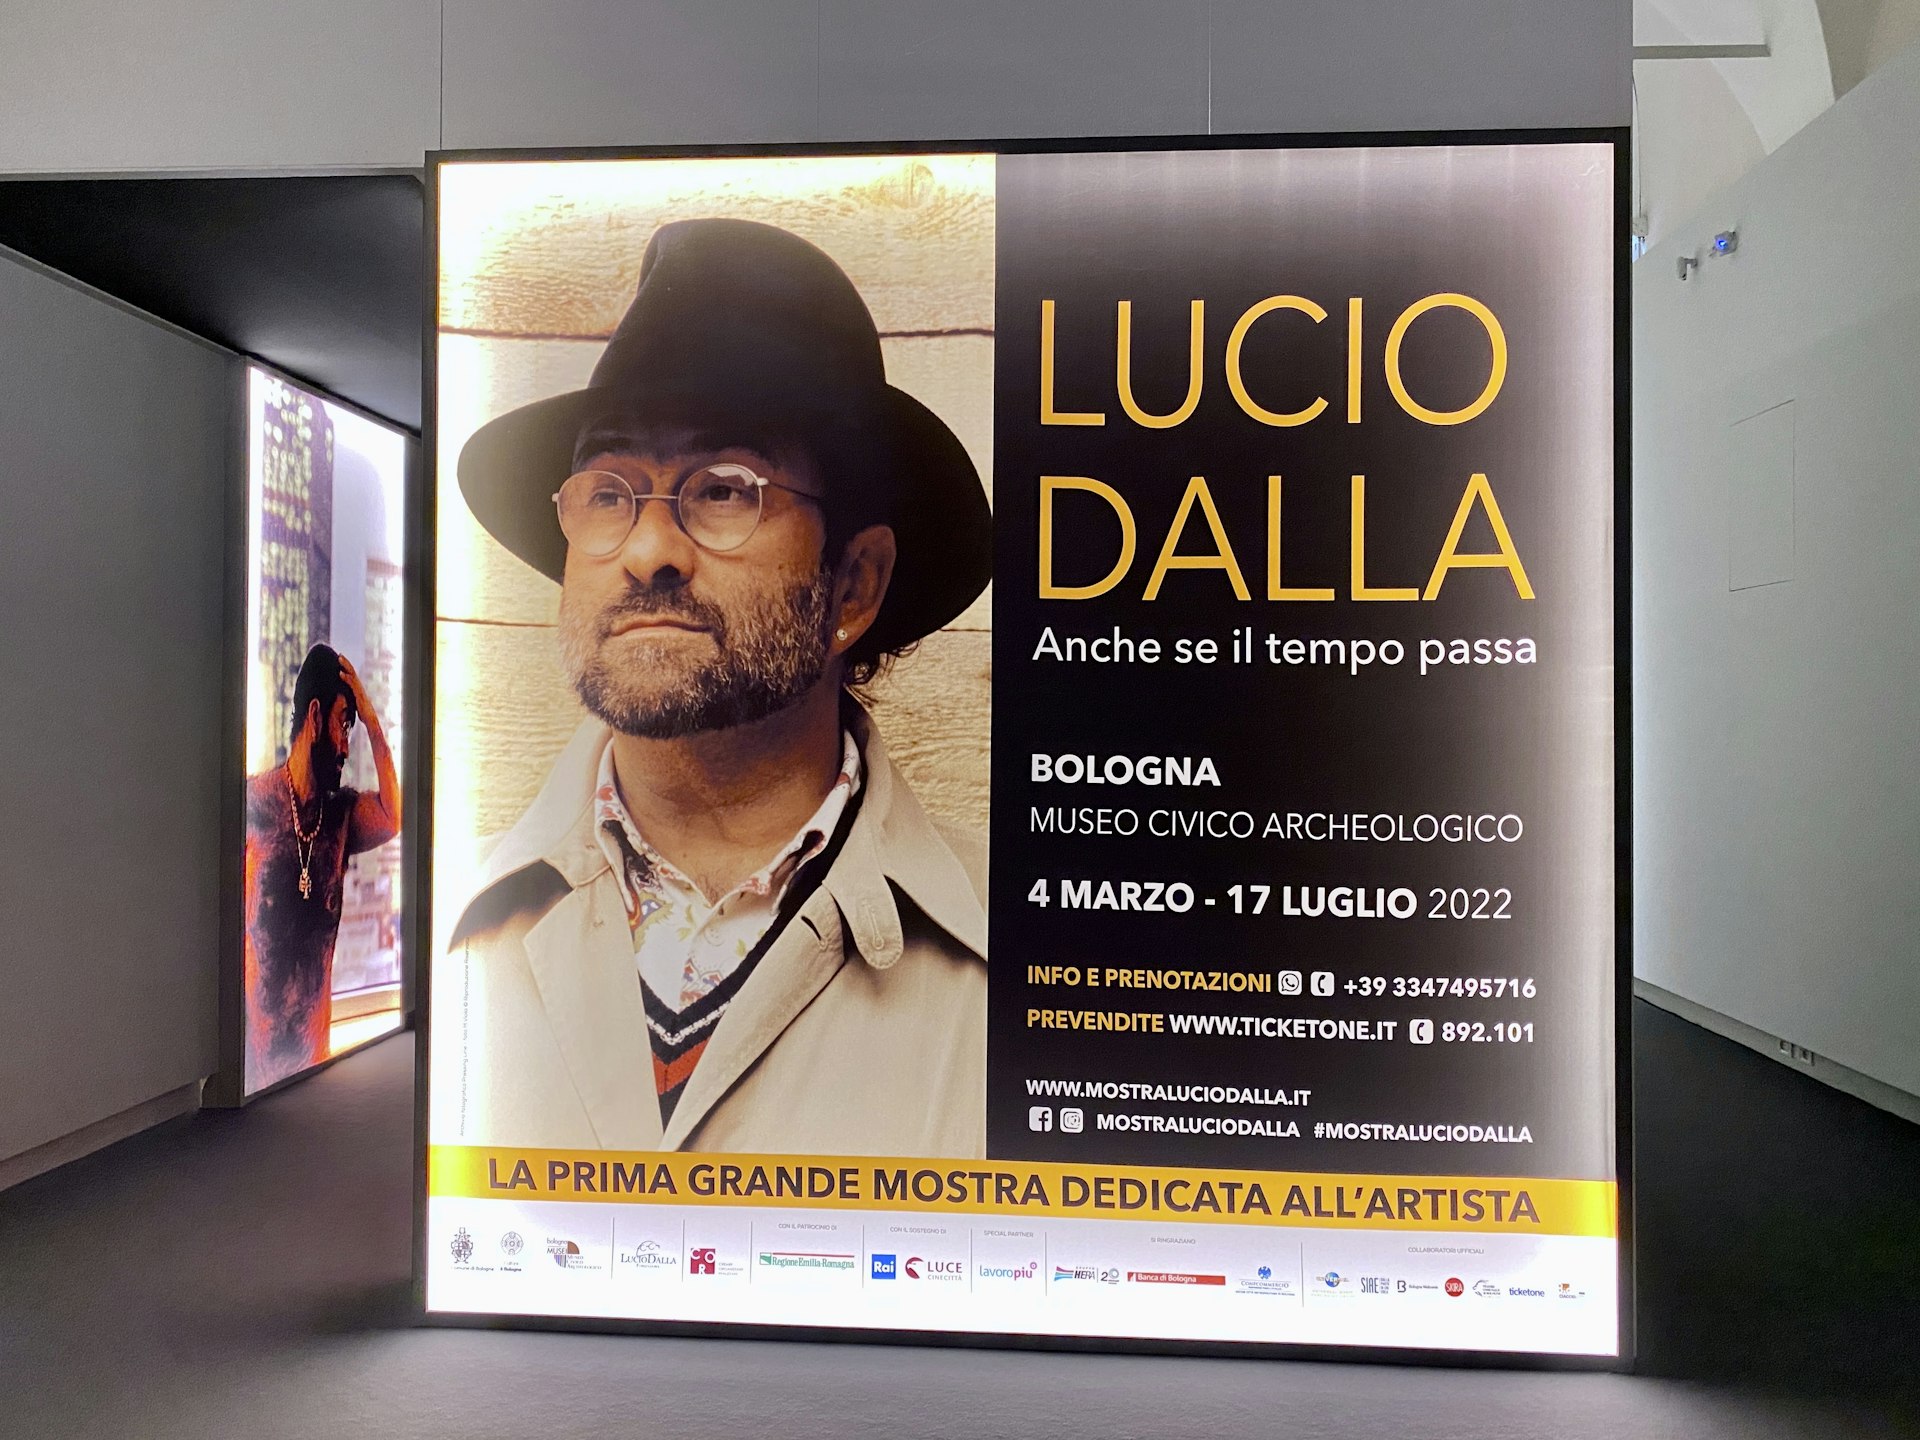 A first look at the new Lucio Dalla exhibition in Bologna